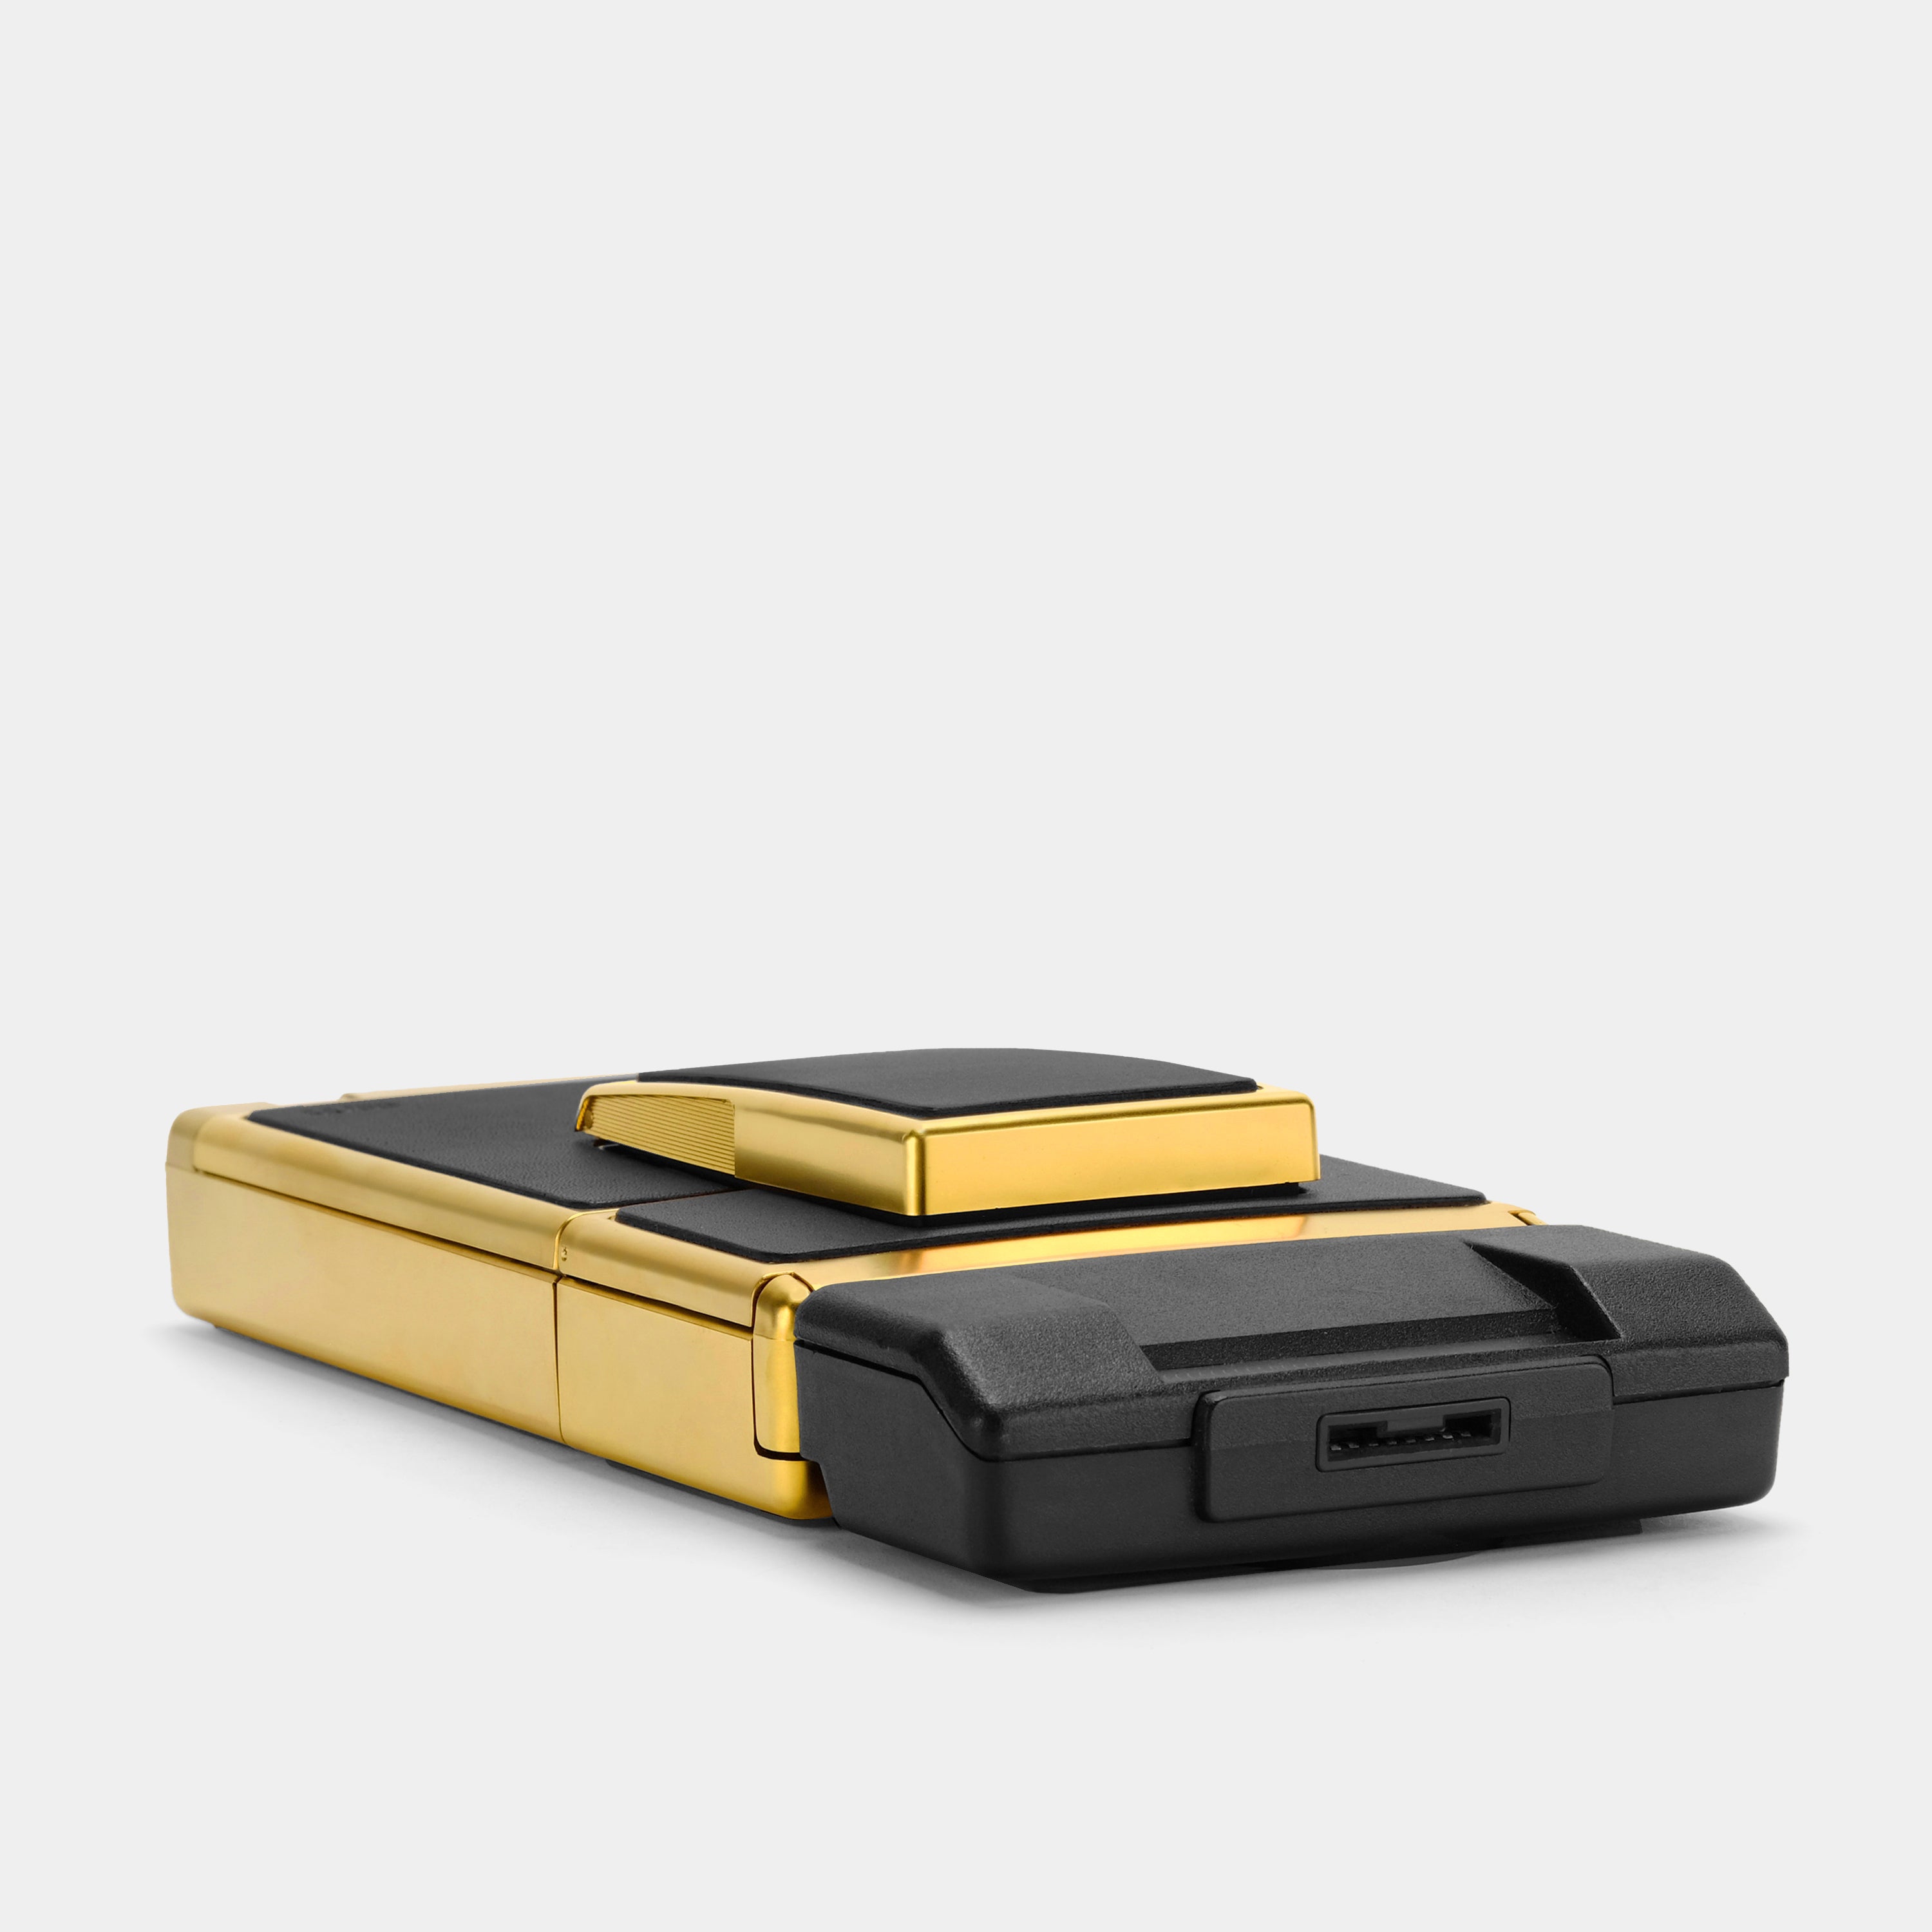 SX-70 Sonar Autofocus "24K Gold Edition" Instant Film Camera